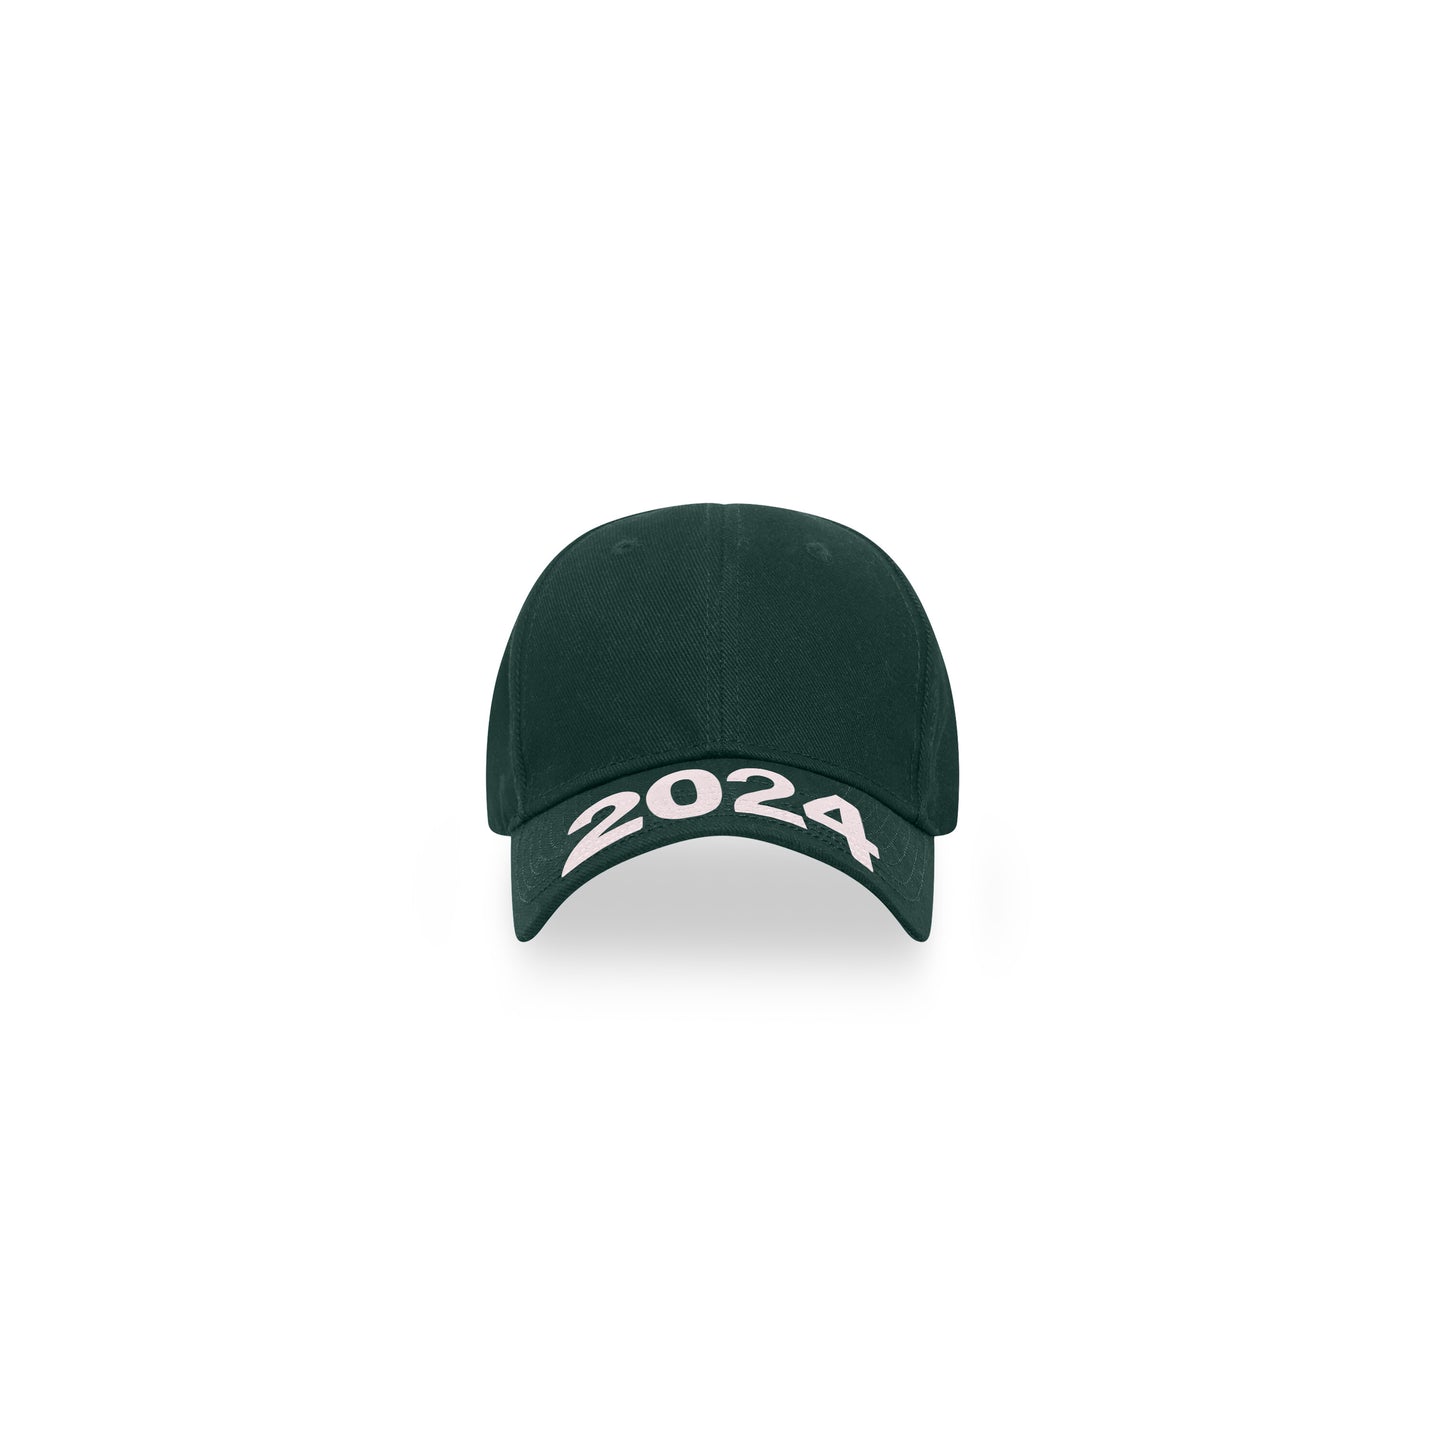 Green 2024 Hat